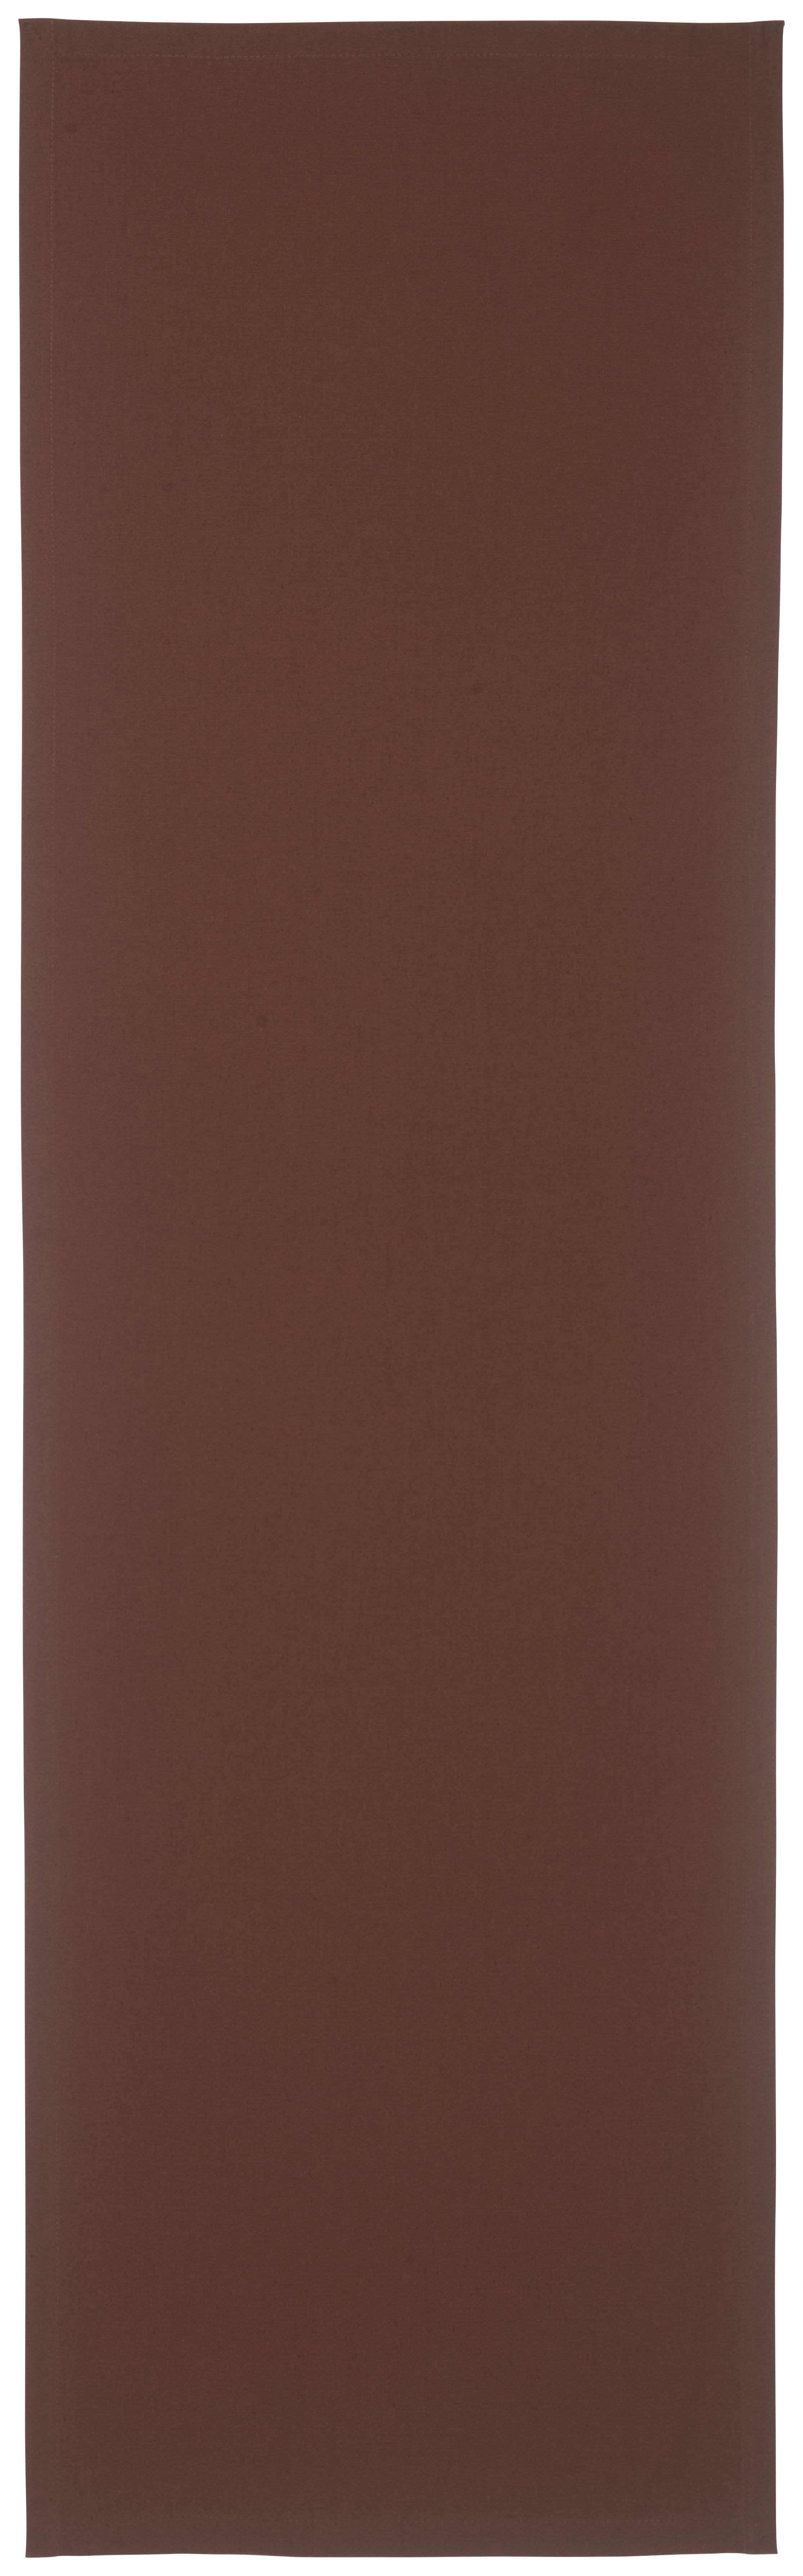 TISCHLÄUFER 45/150 cm   - Dunkelbraun, Basics, Textil (45/150cm) - Novel